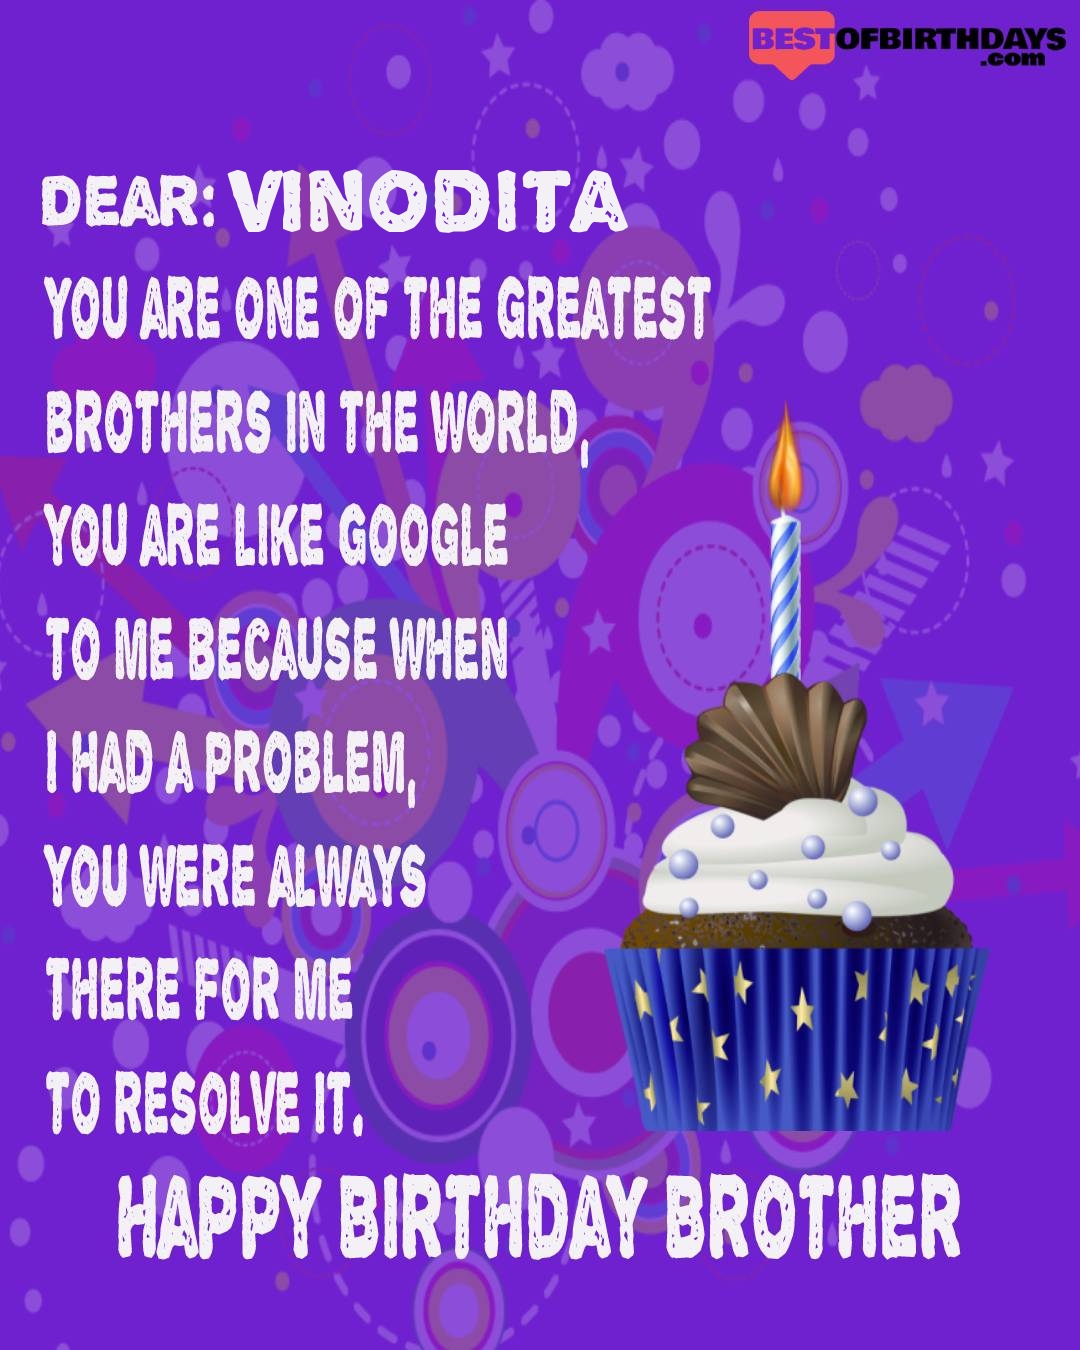 Happy birthday vinodita bhai brother bro